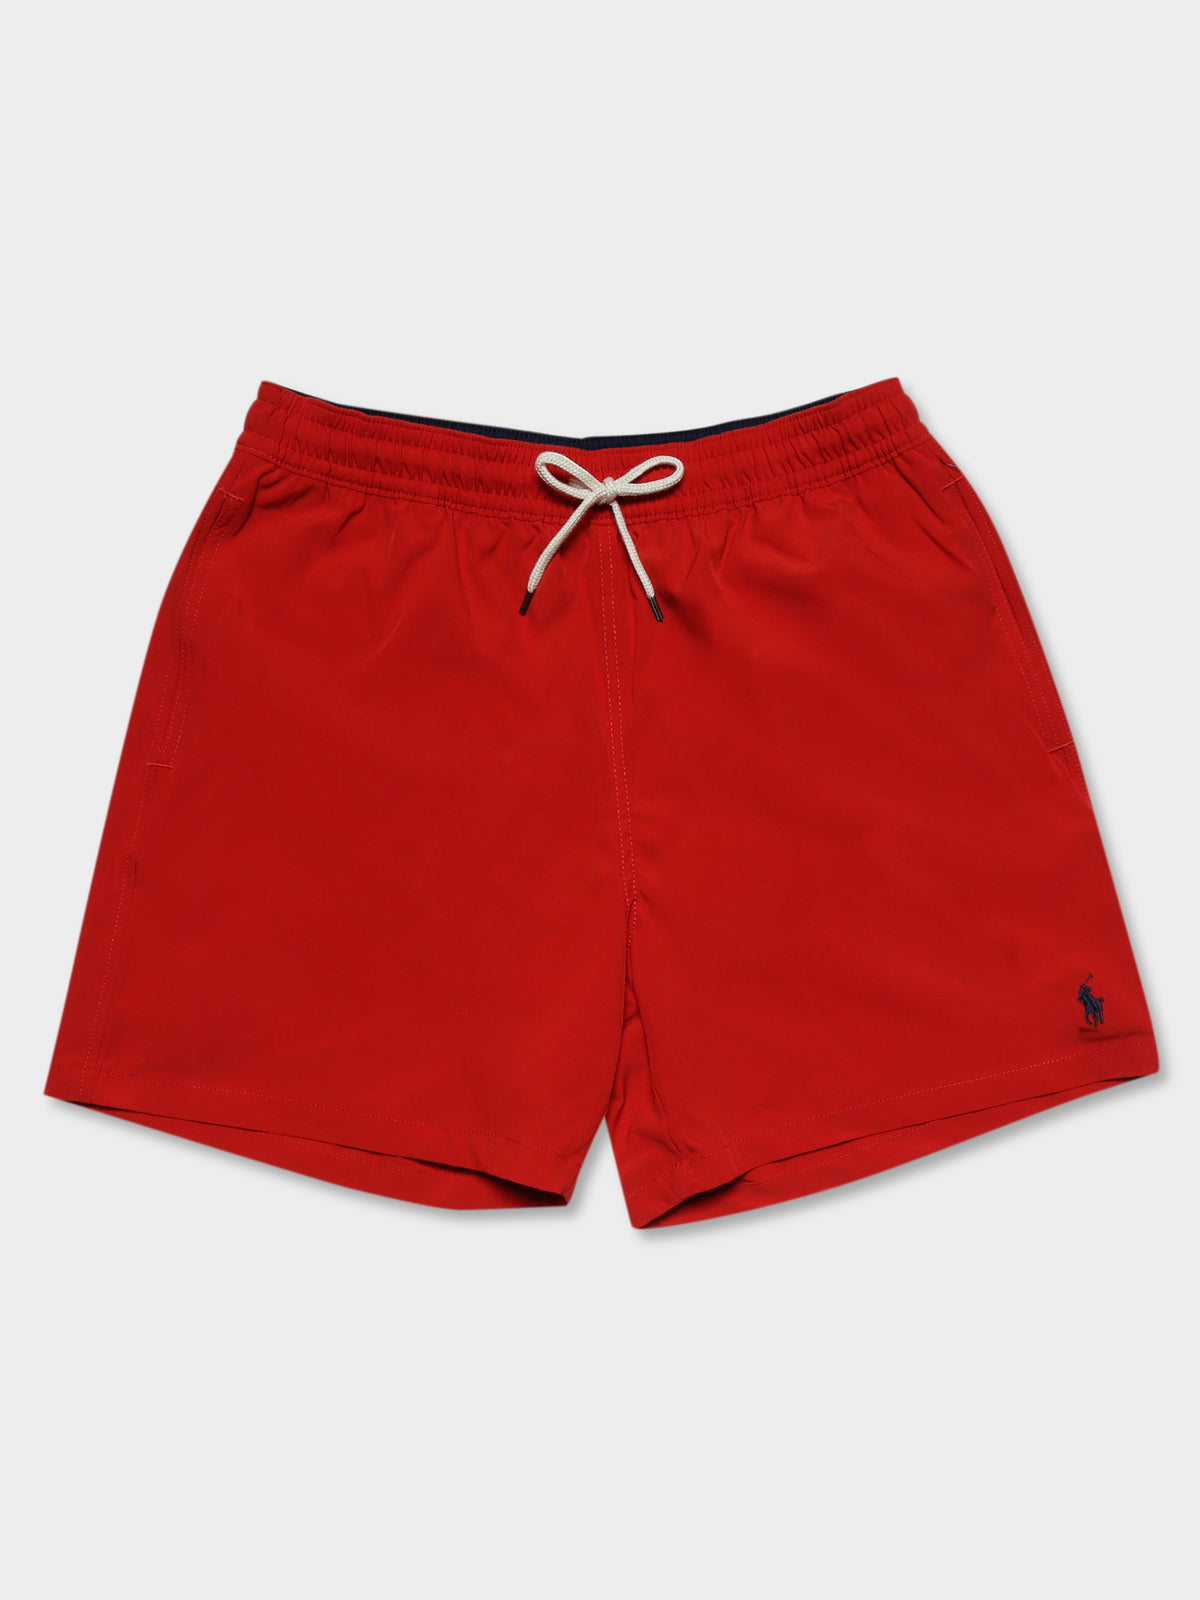 Traveller Swim Shorts in Red